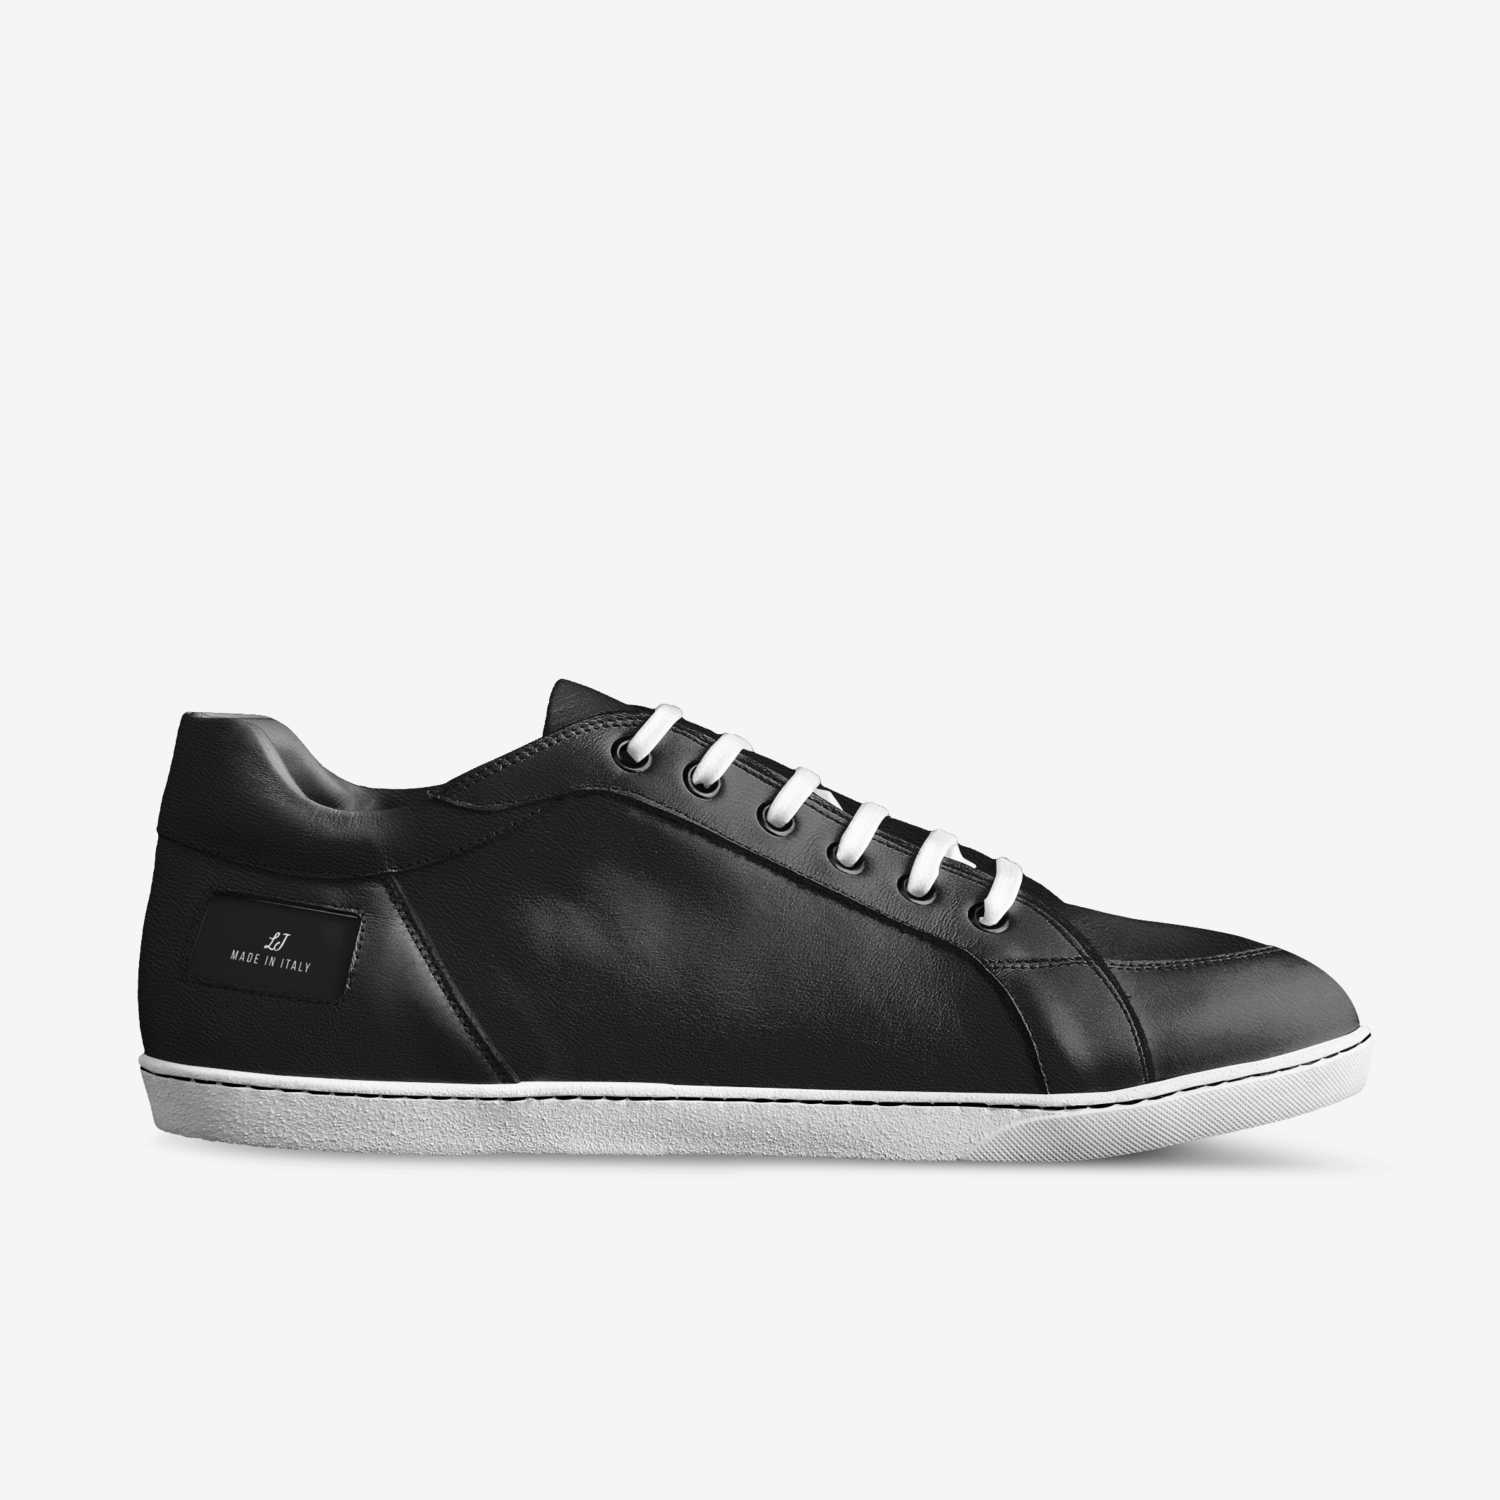 LJ | A Custom Shoe concept by Logan J